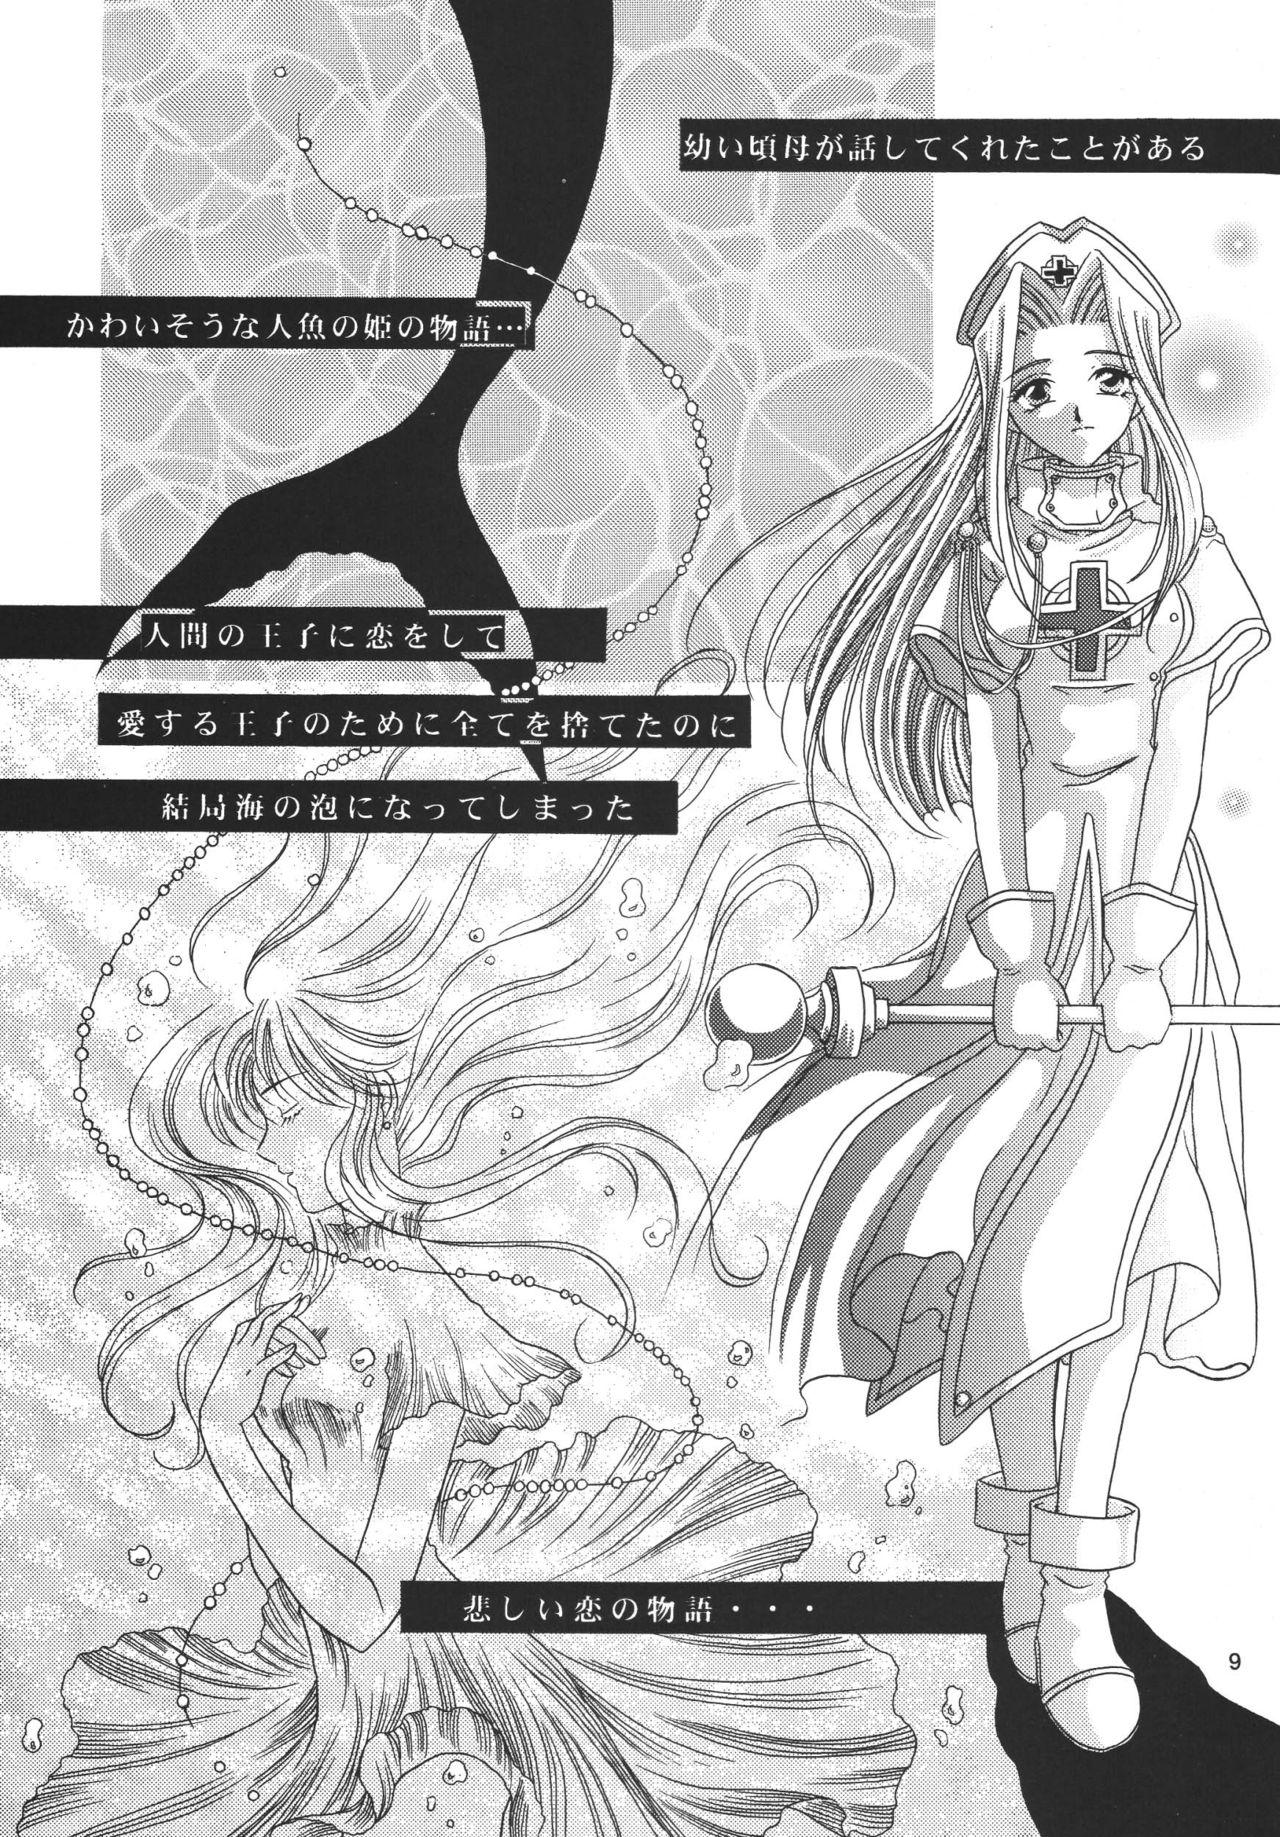 Bottom Snowdrop no Hanakotoba - Tales of phantasia Rebolando - Page 9